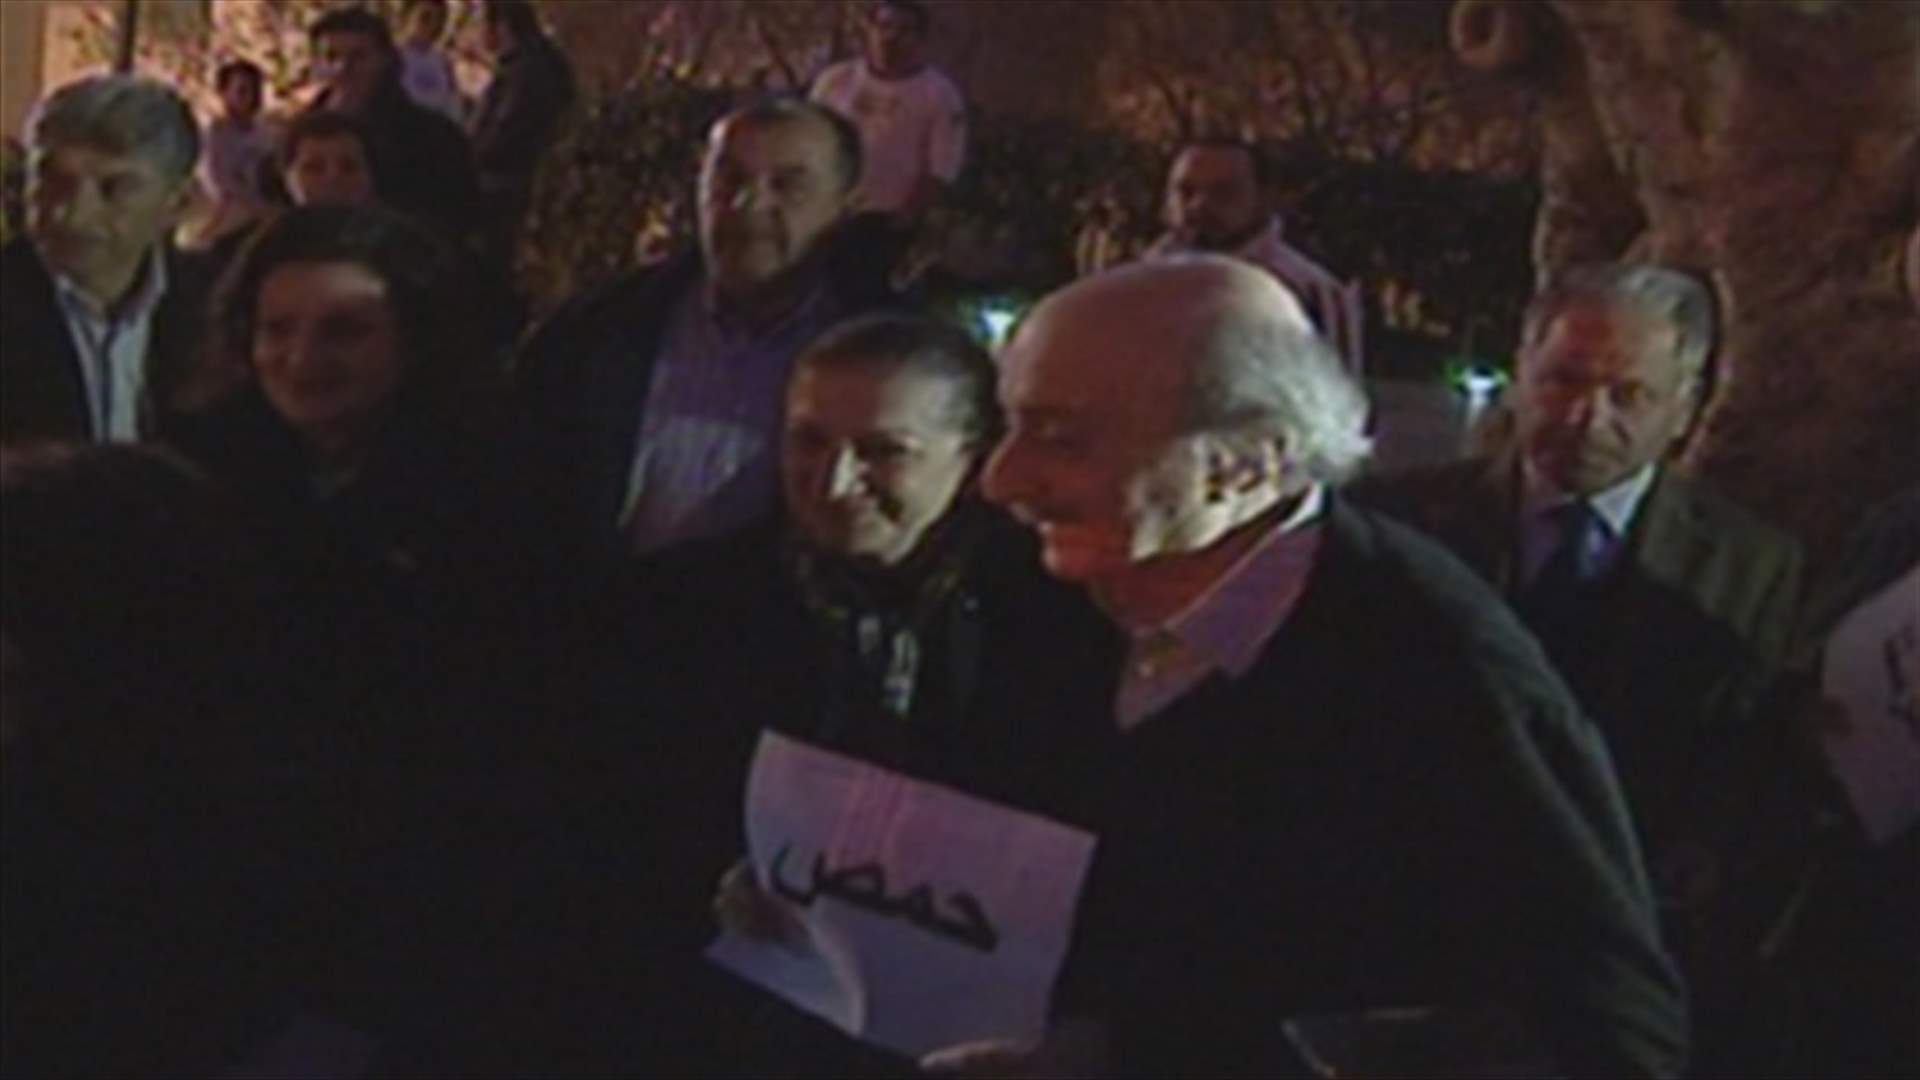 In boldest step yet, Jumblatt joins anti-Assad rally 